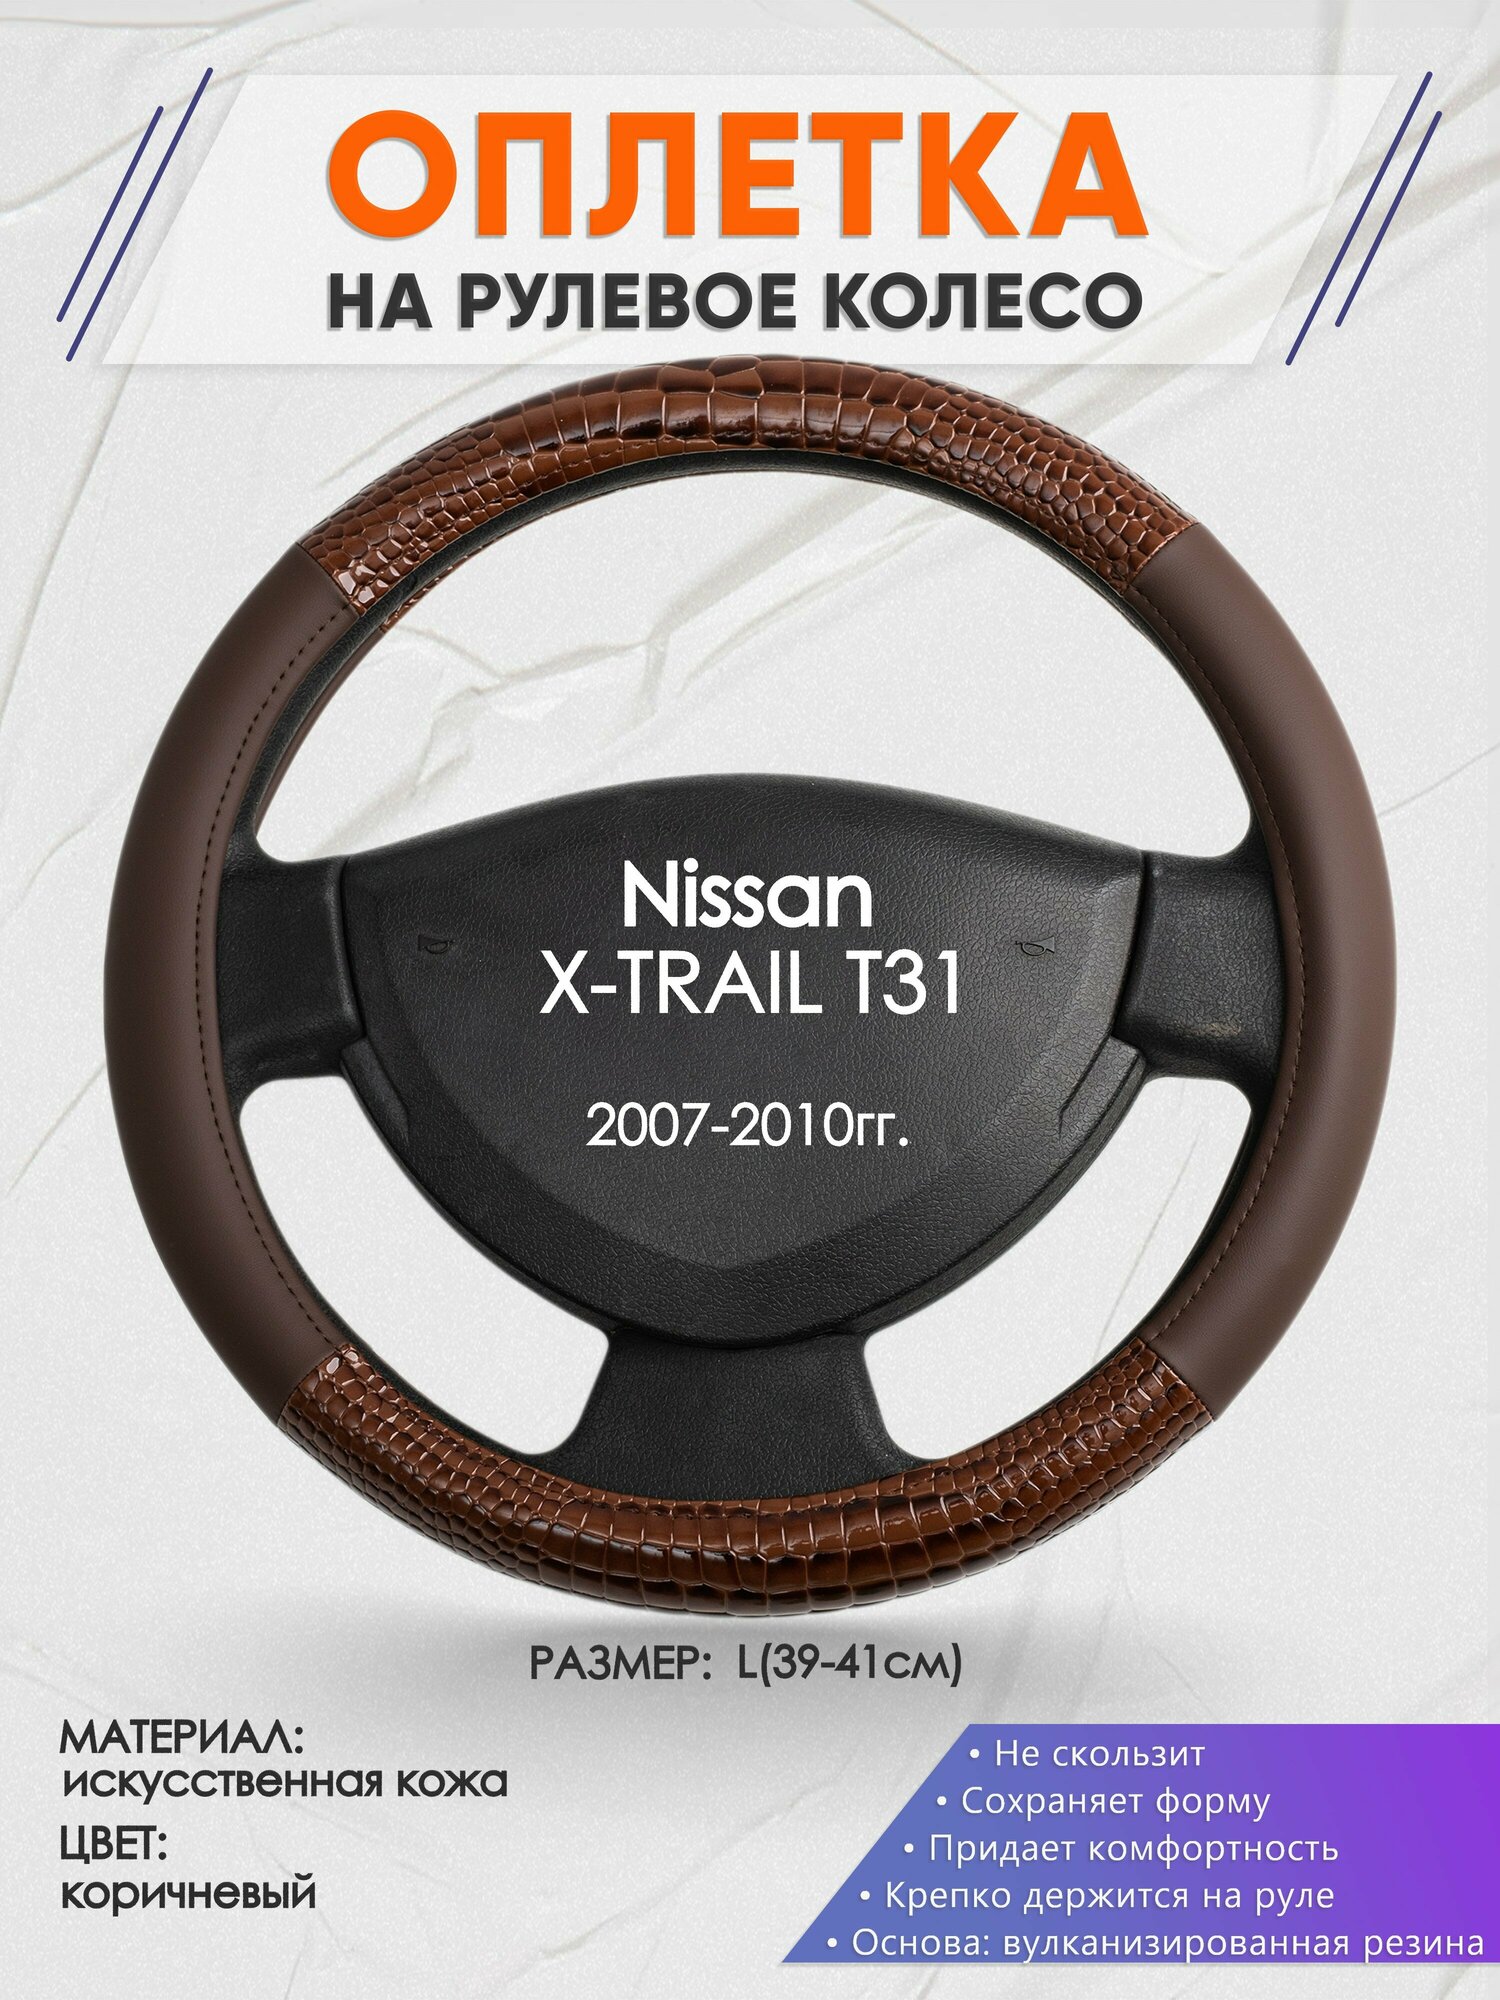 Оплетка на руль для Nissan X-TRAIL T31(Ниссан Икс Трейл) 2007-2010, L(39-41см), Искусственная кожа 85